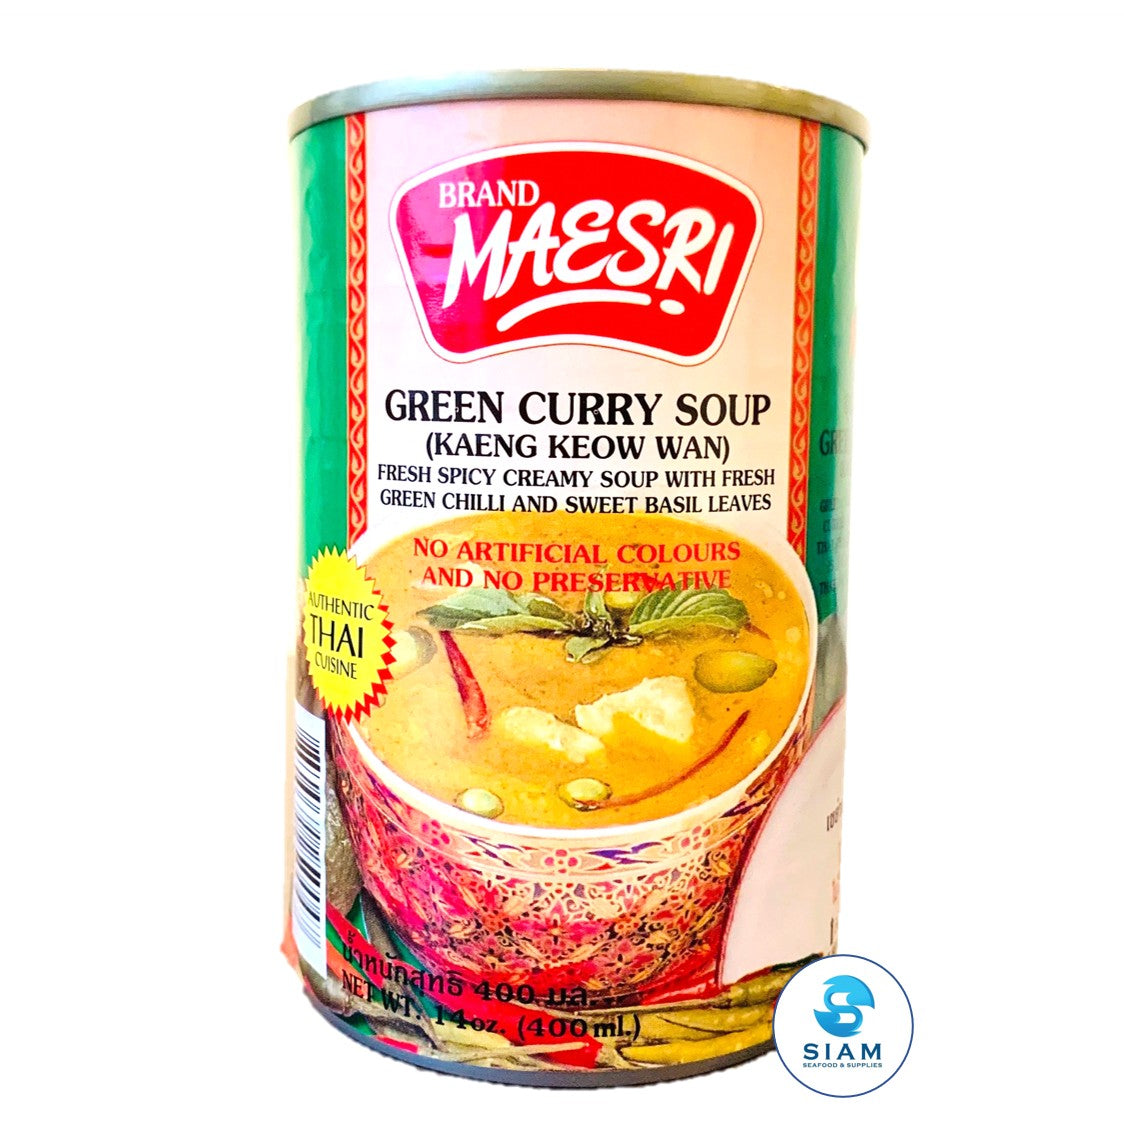 (Case) Green Curry Soup, Ready to Cook - MaeSri (14 oz x 12 per case) ซุปแกงเขียวหวานสำเร็จรูป  แม่ศรี แบบยกลัง MaeSri